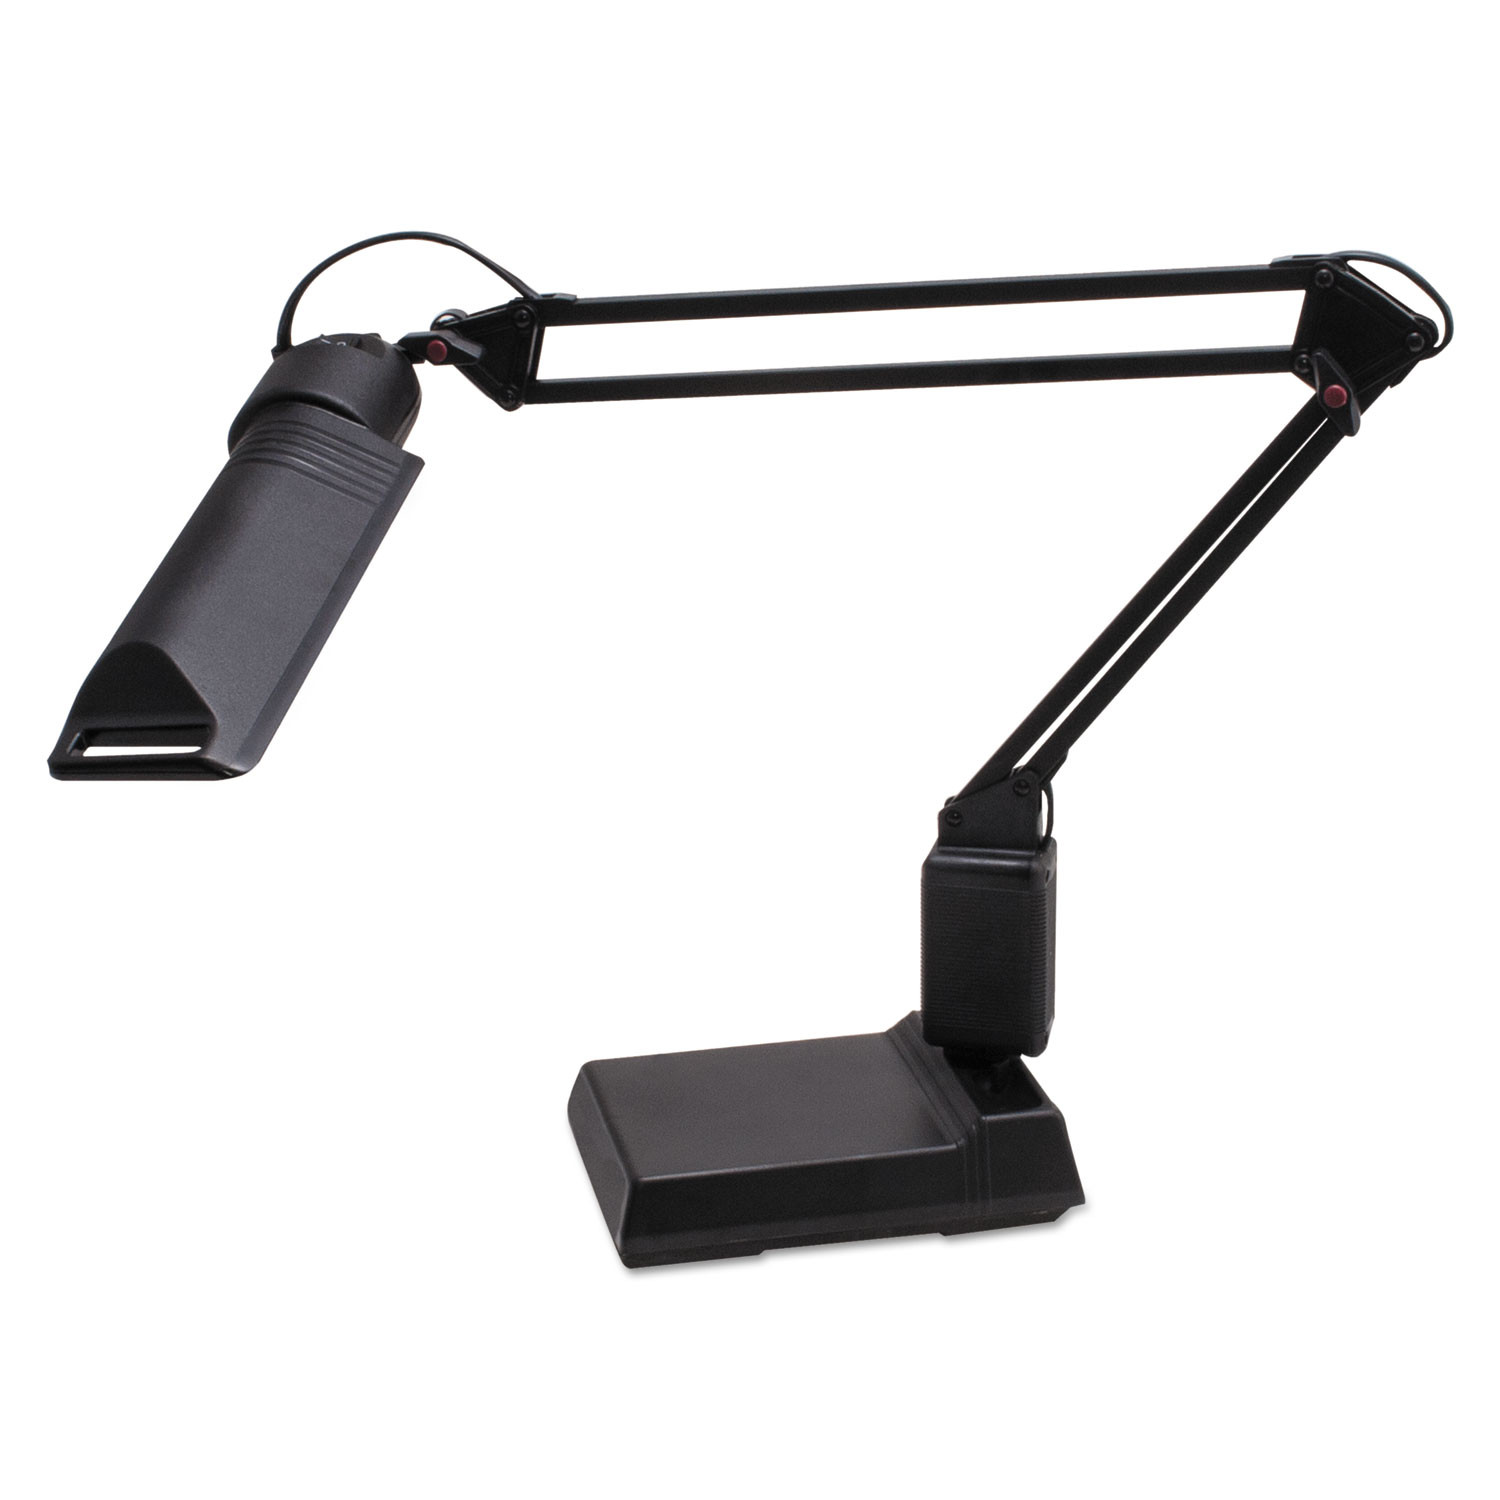 Best ideas about Florescent Desk Lamps
. Save or Pin 13W Fluorescent puter Task Lamp by Ledu LEDL283MB Now.